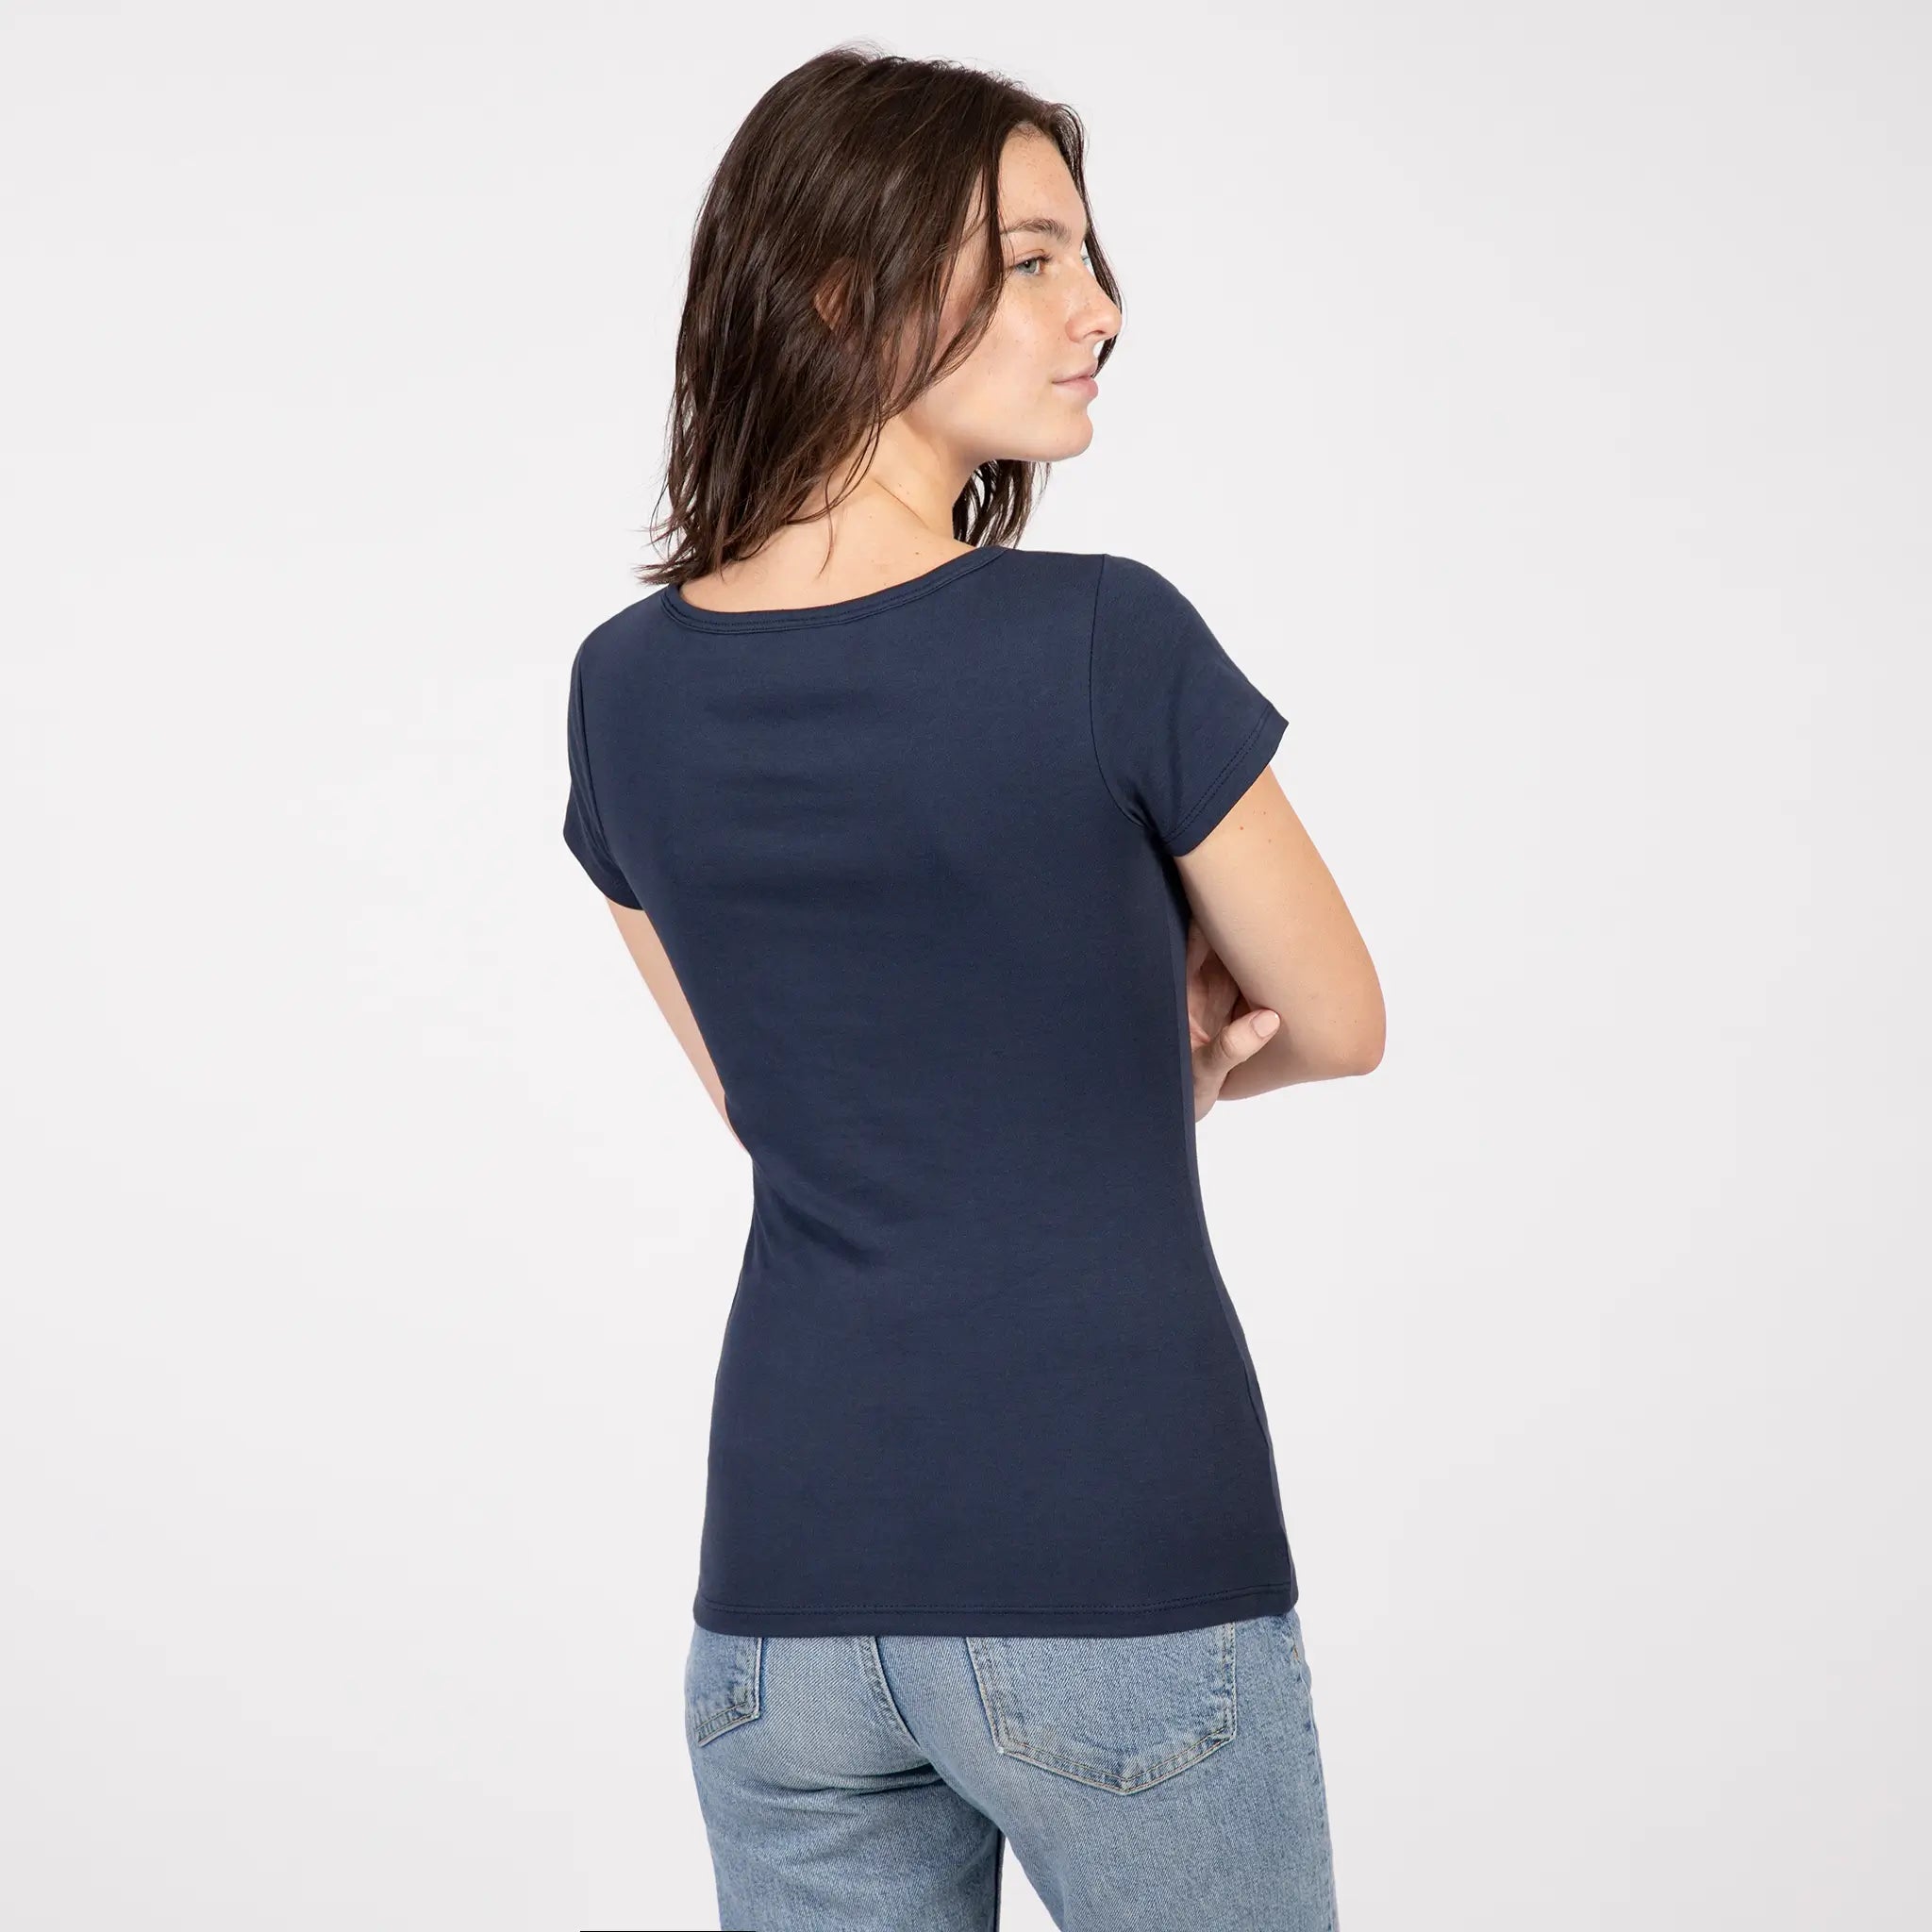 womens versatile design tshirt crew neck color navy blue